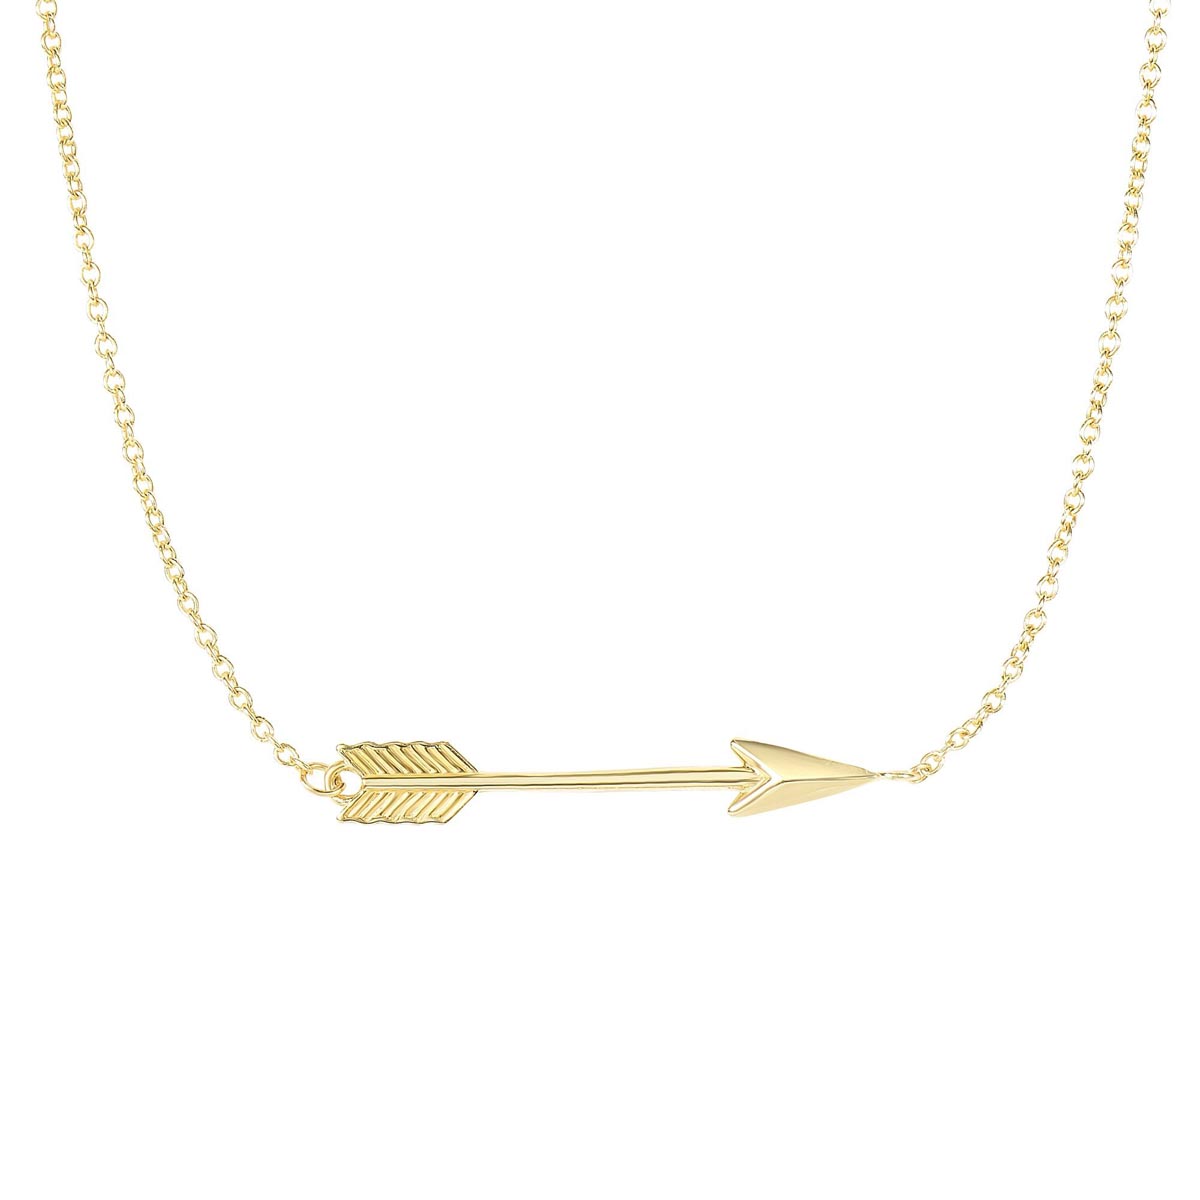 Arrow Sideways Necklace in 14kt Yellow Gold